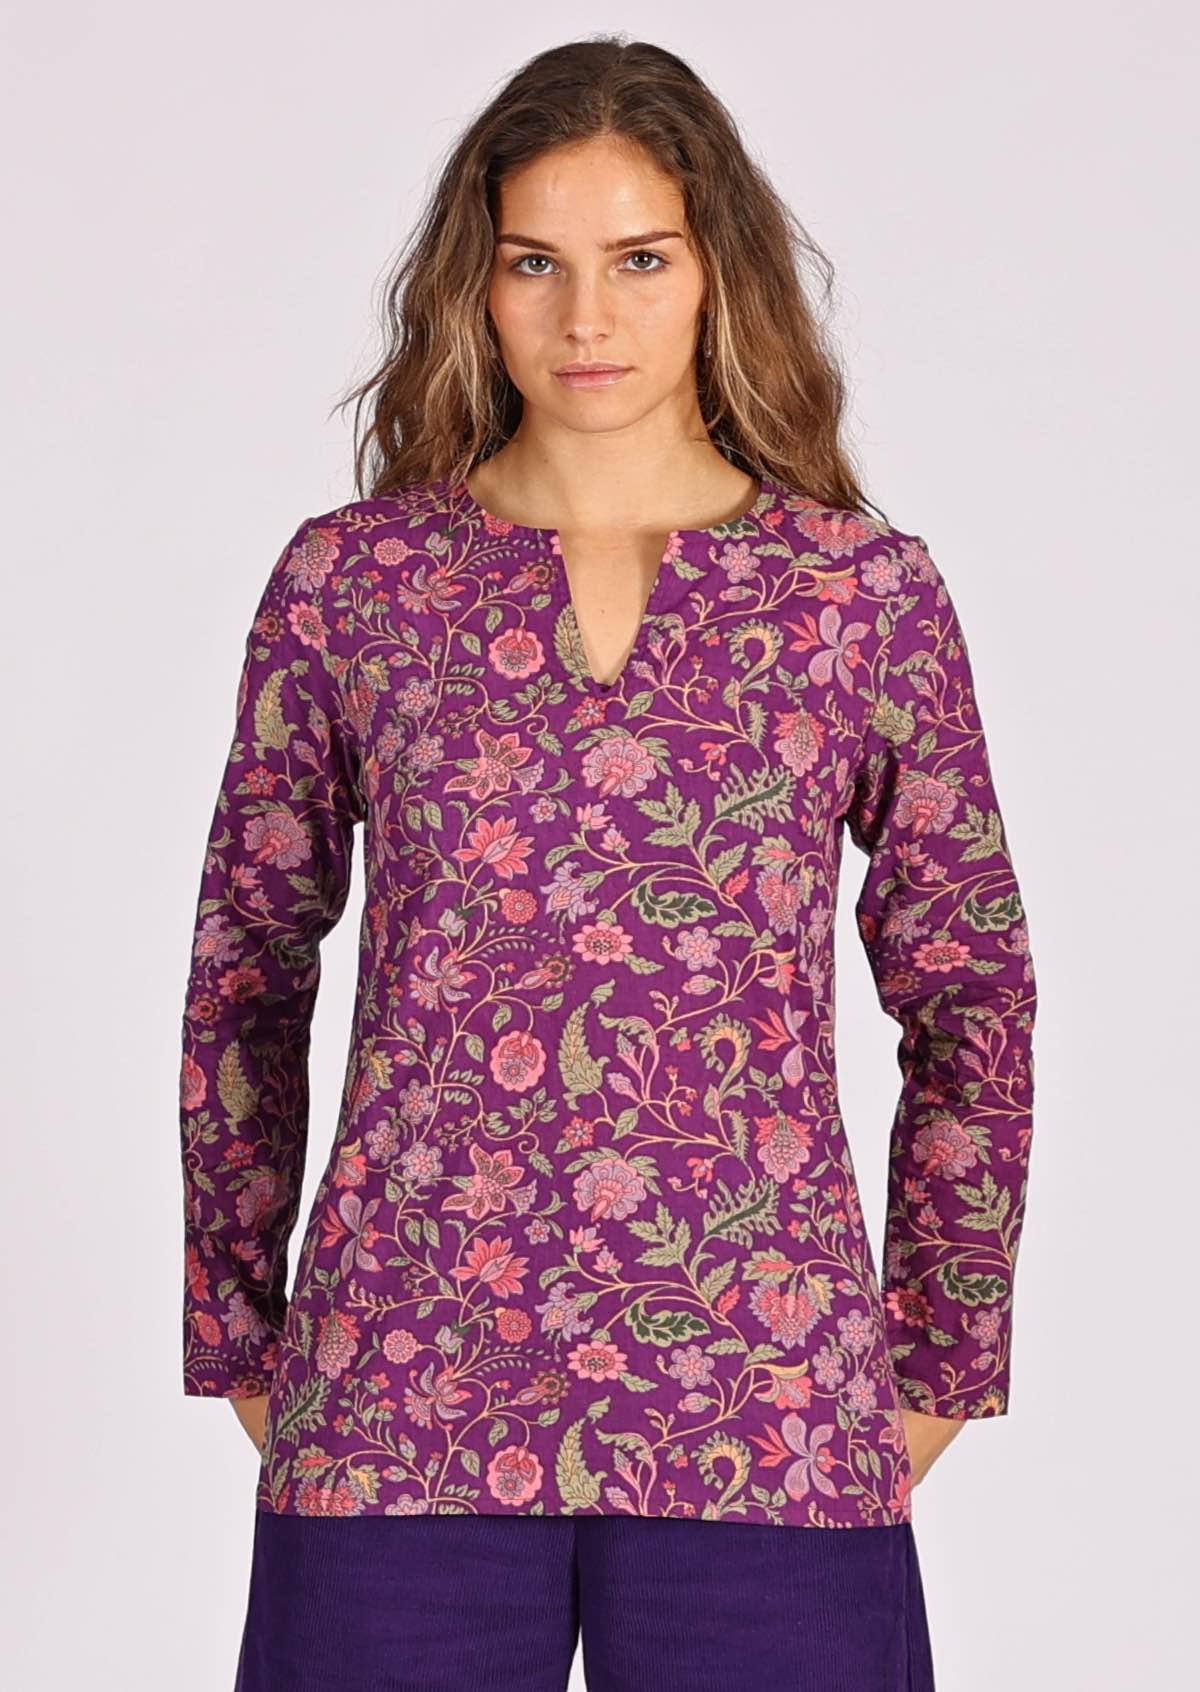 100% cotton purple base floral print long sleeve top with V cutout neckline